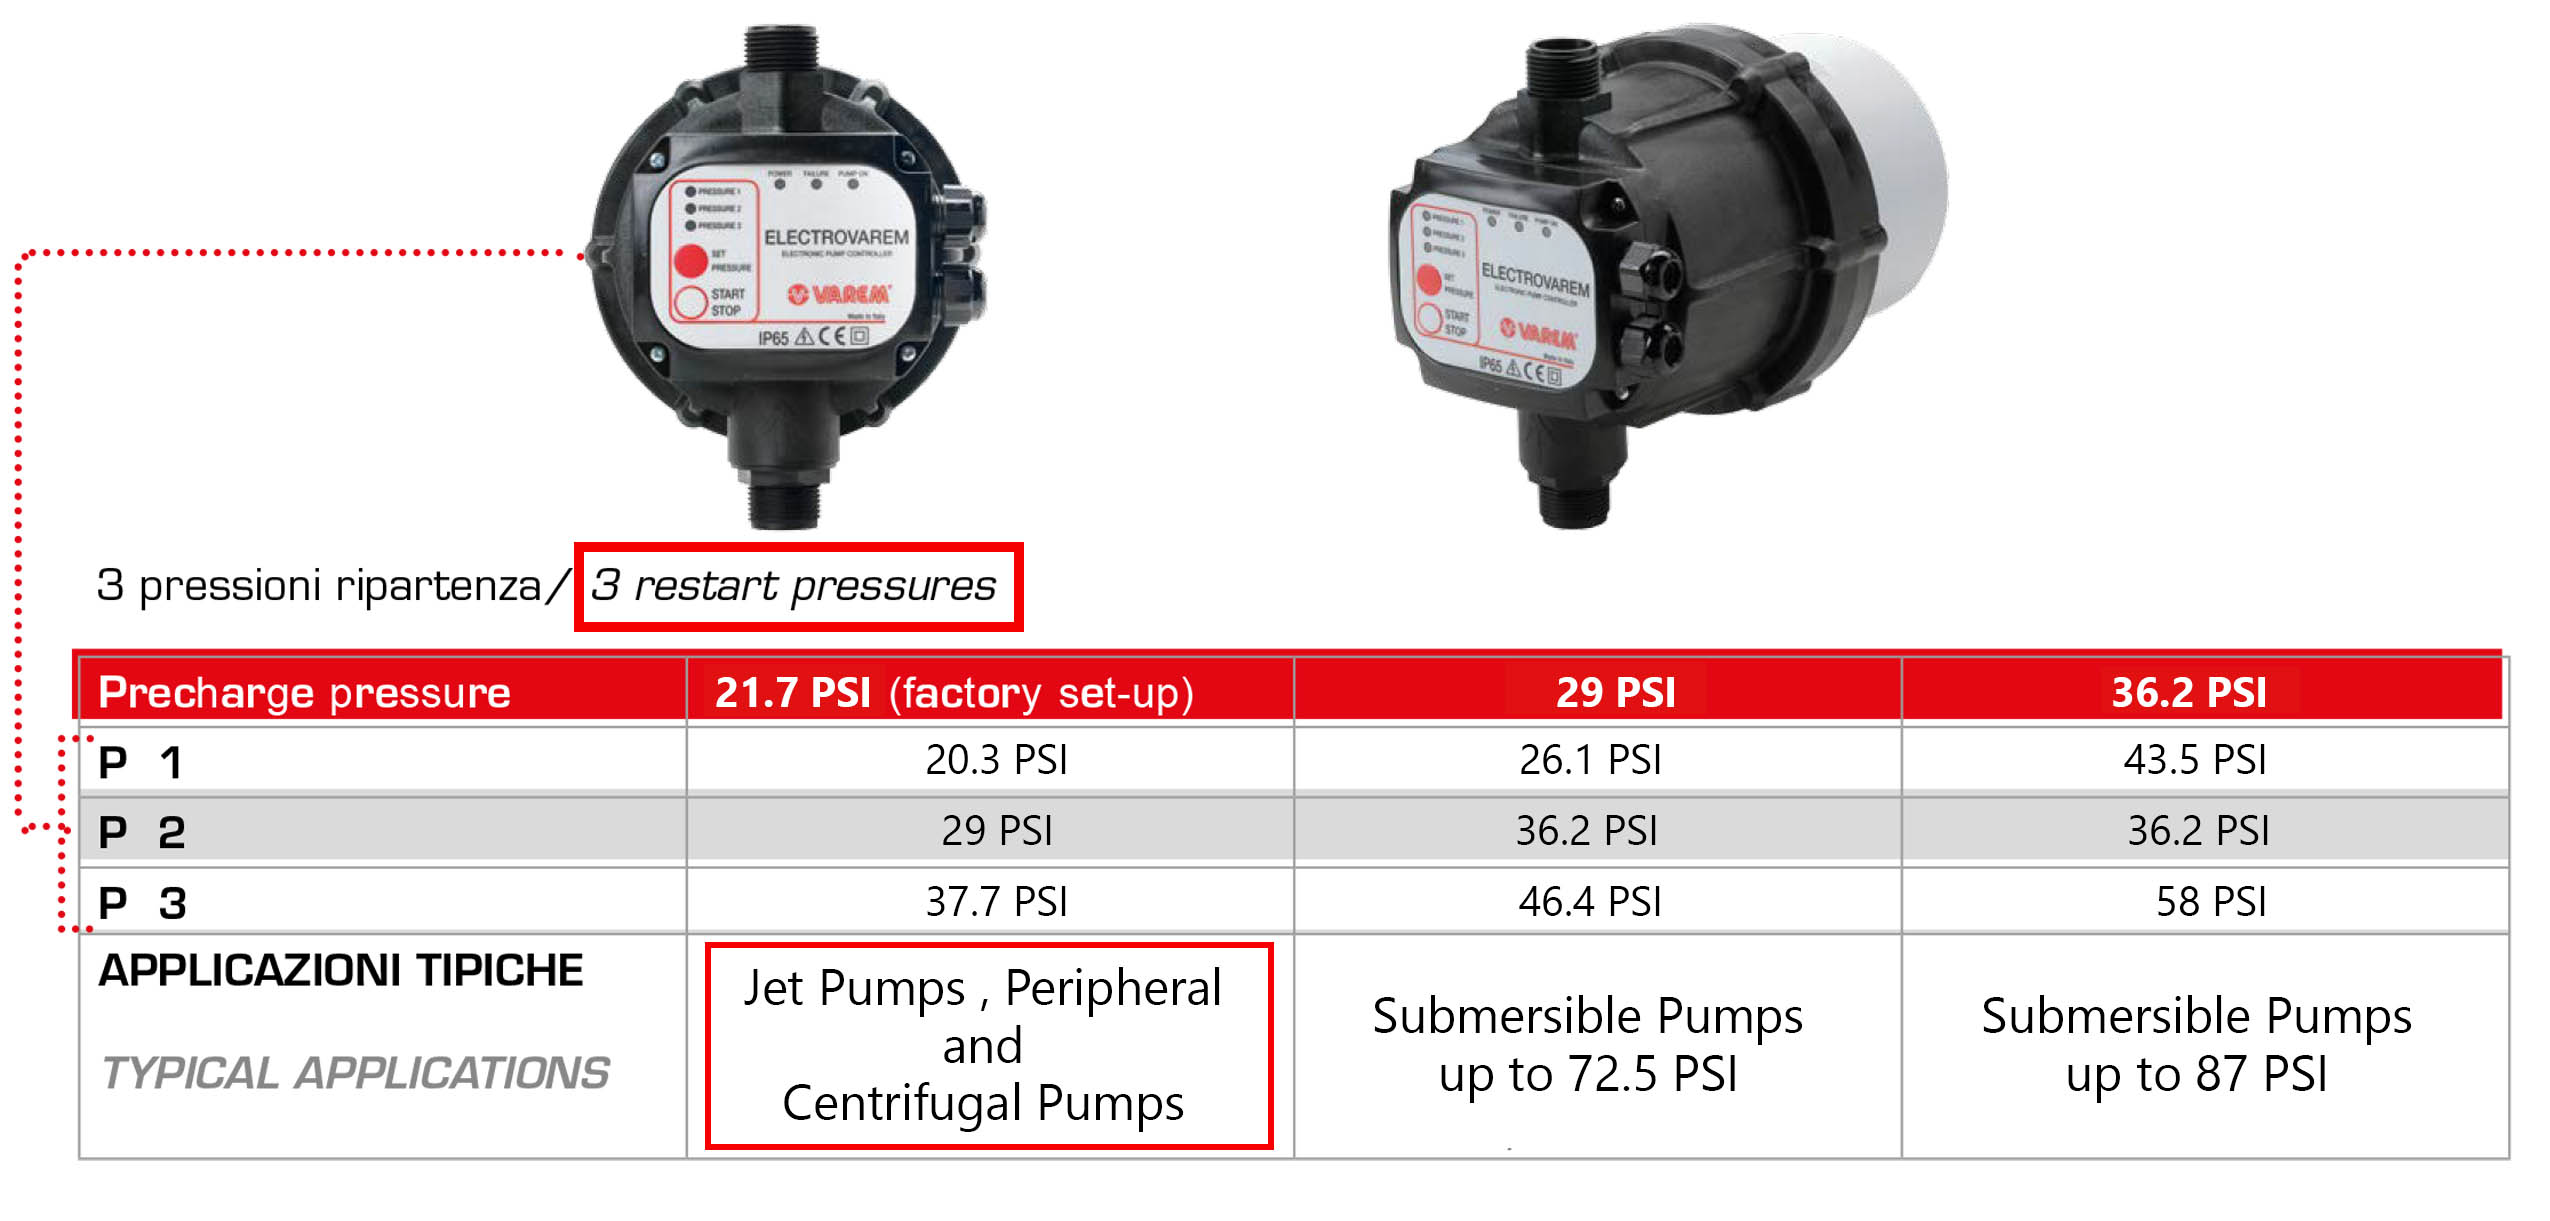 Electrovarem Pressure sets for Jet pumps, peripheral and centrifugal pumps